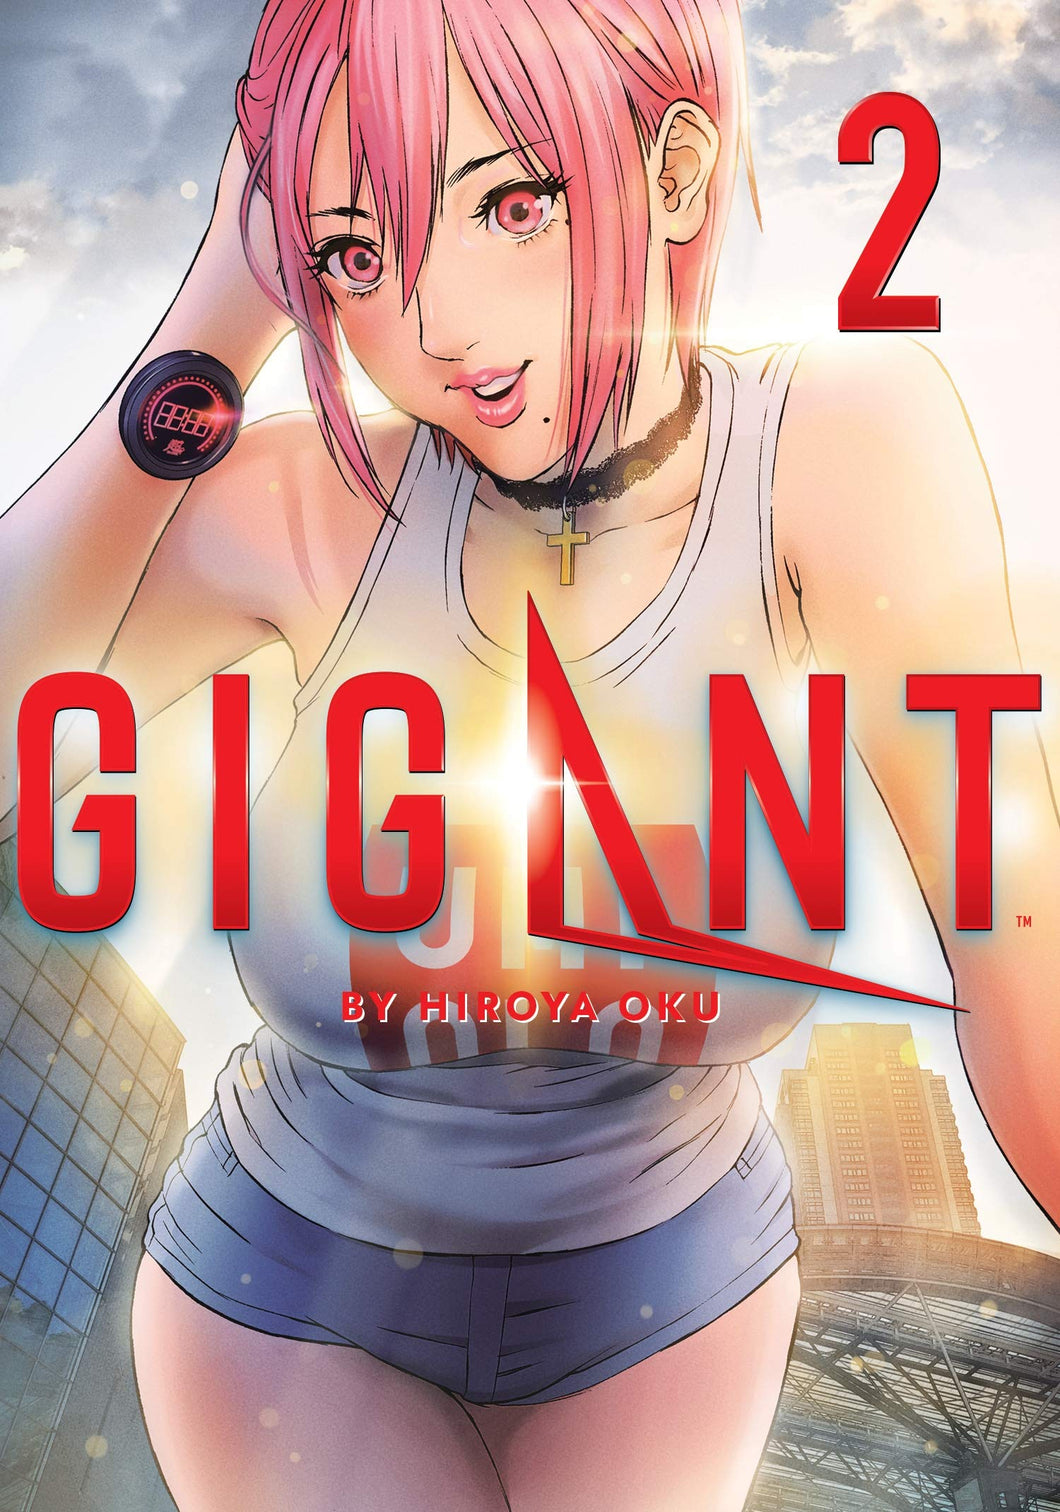 Gigant Volume 2